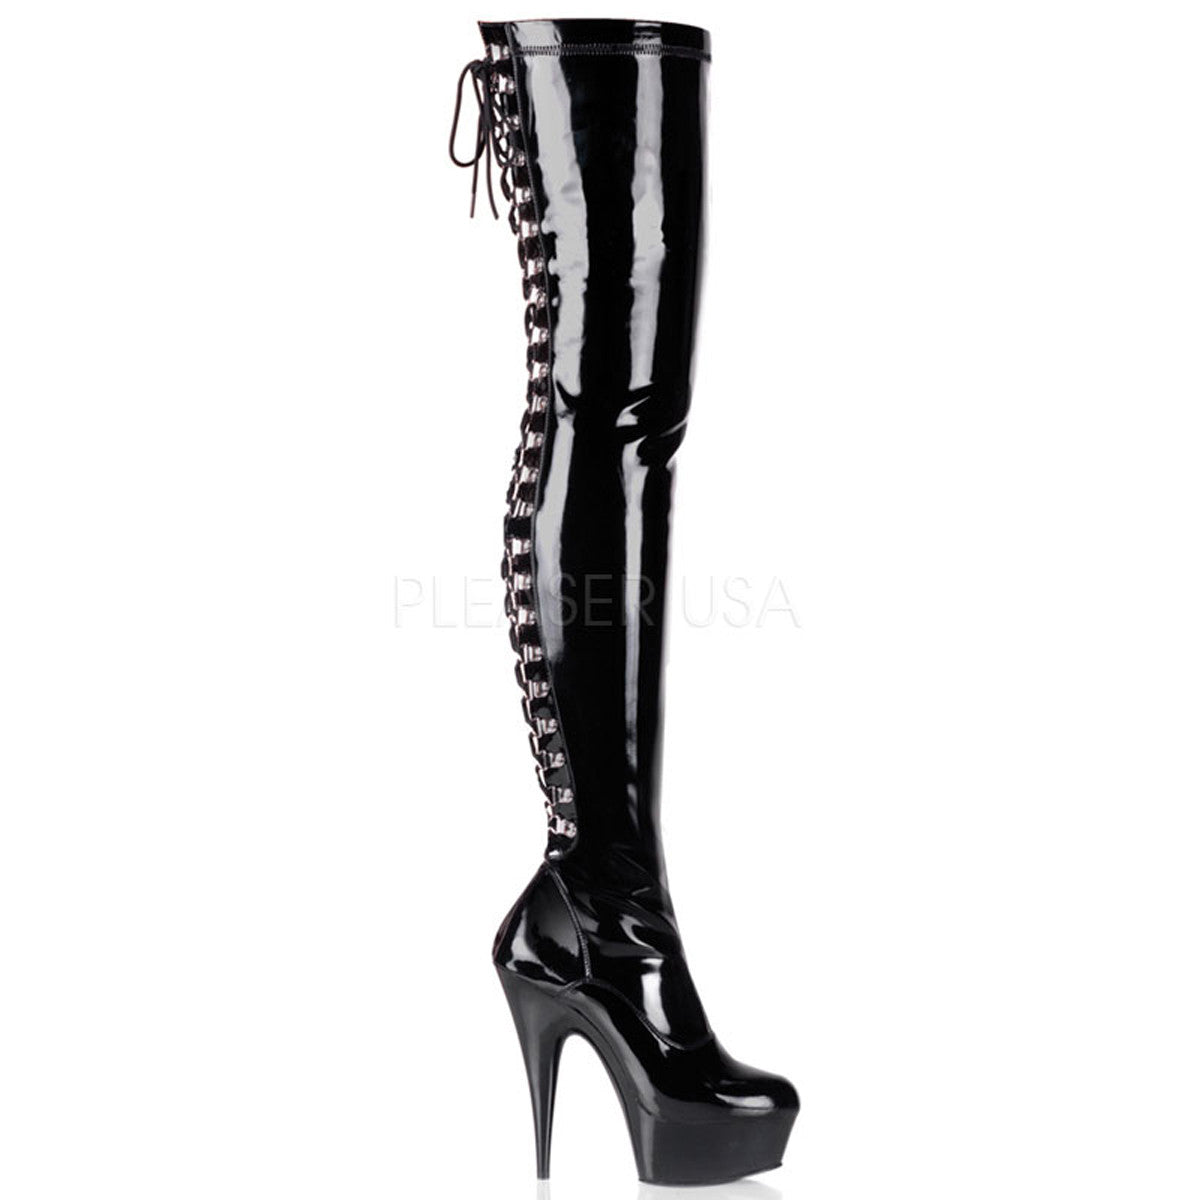 PLEASER DELIGHT-3063 Black Stretch Pat-Black Thigh High Boots - Shoecup.com